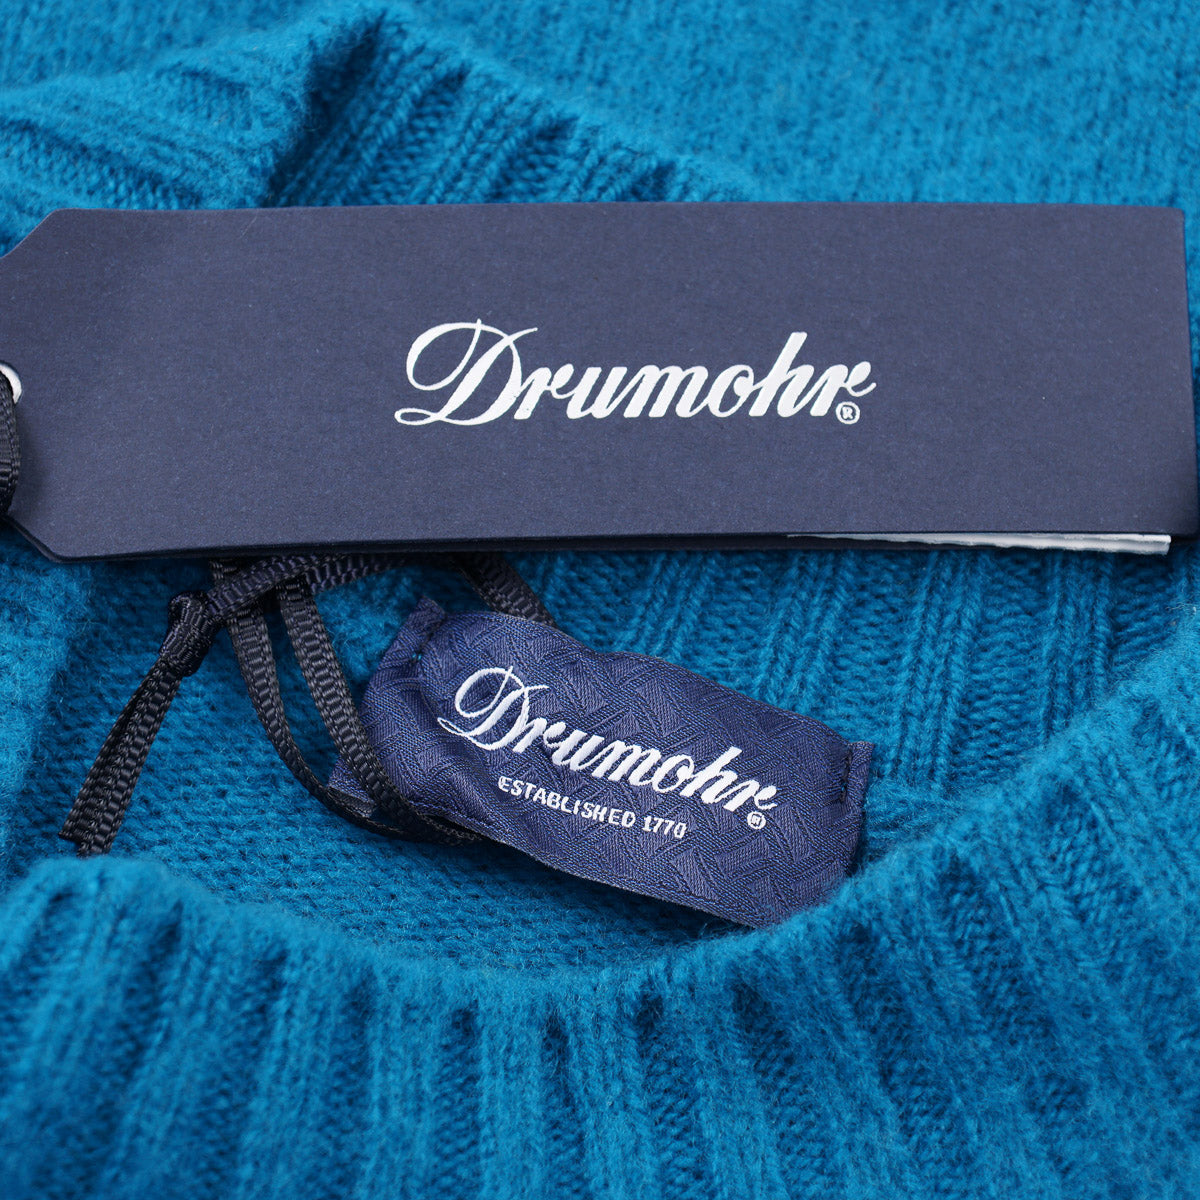 Drumohr Soft Brushed Lambswool Sweater - Top Shelf Apparel